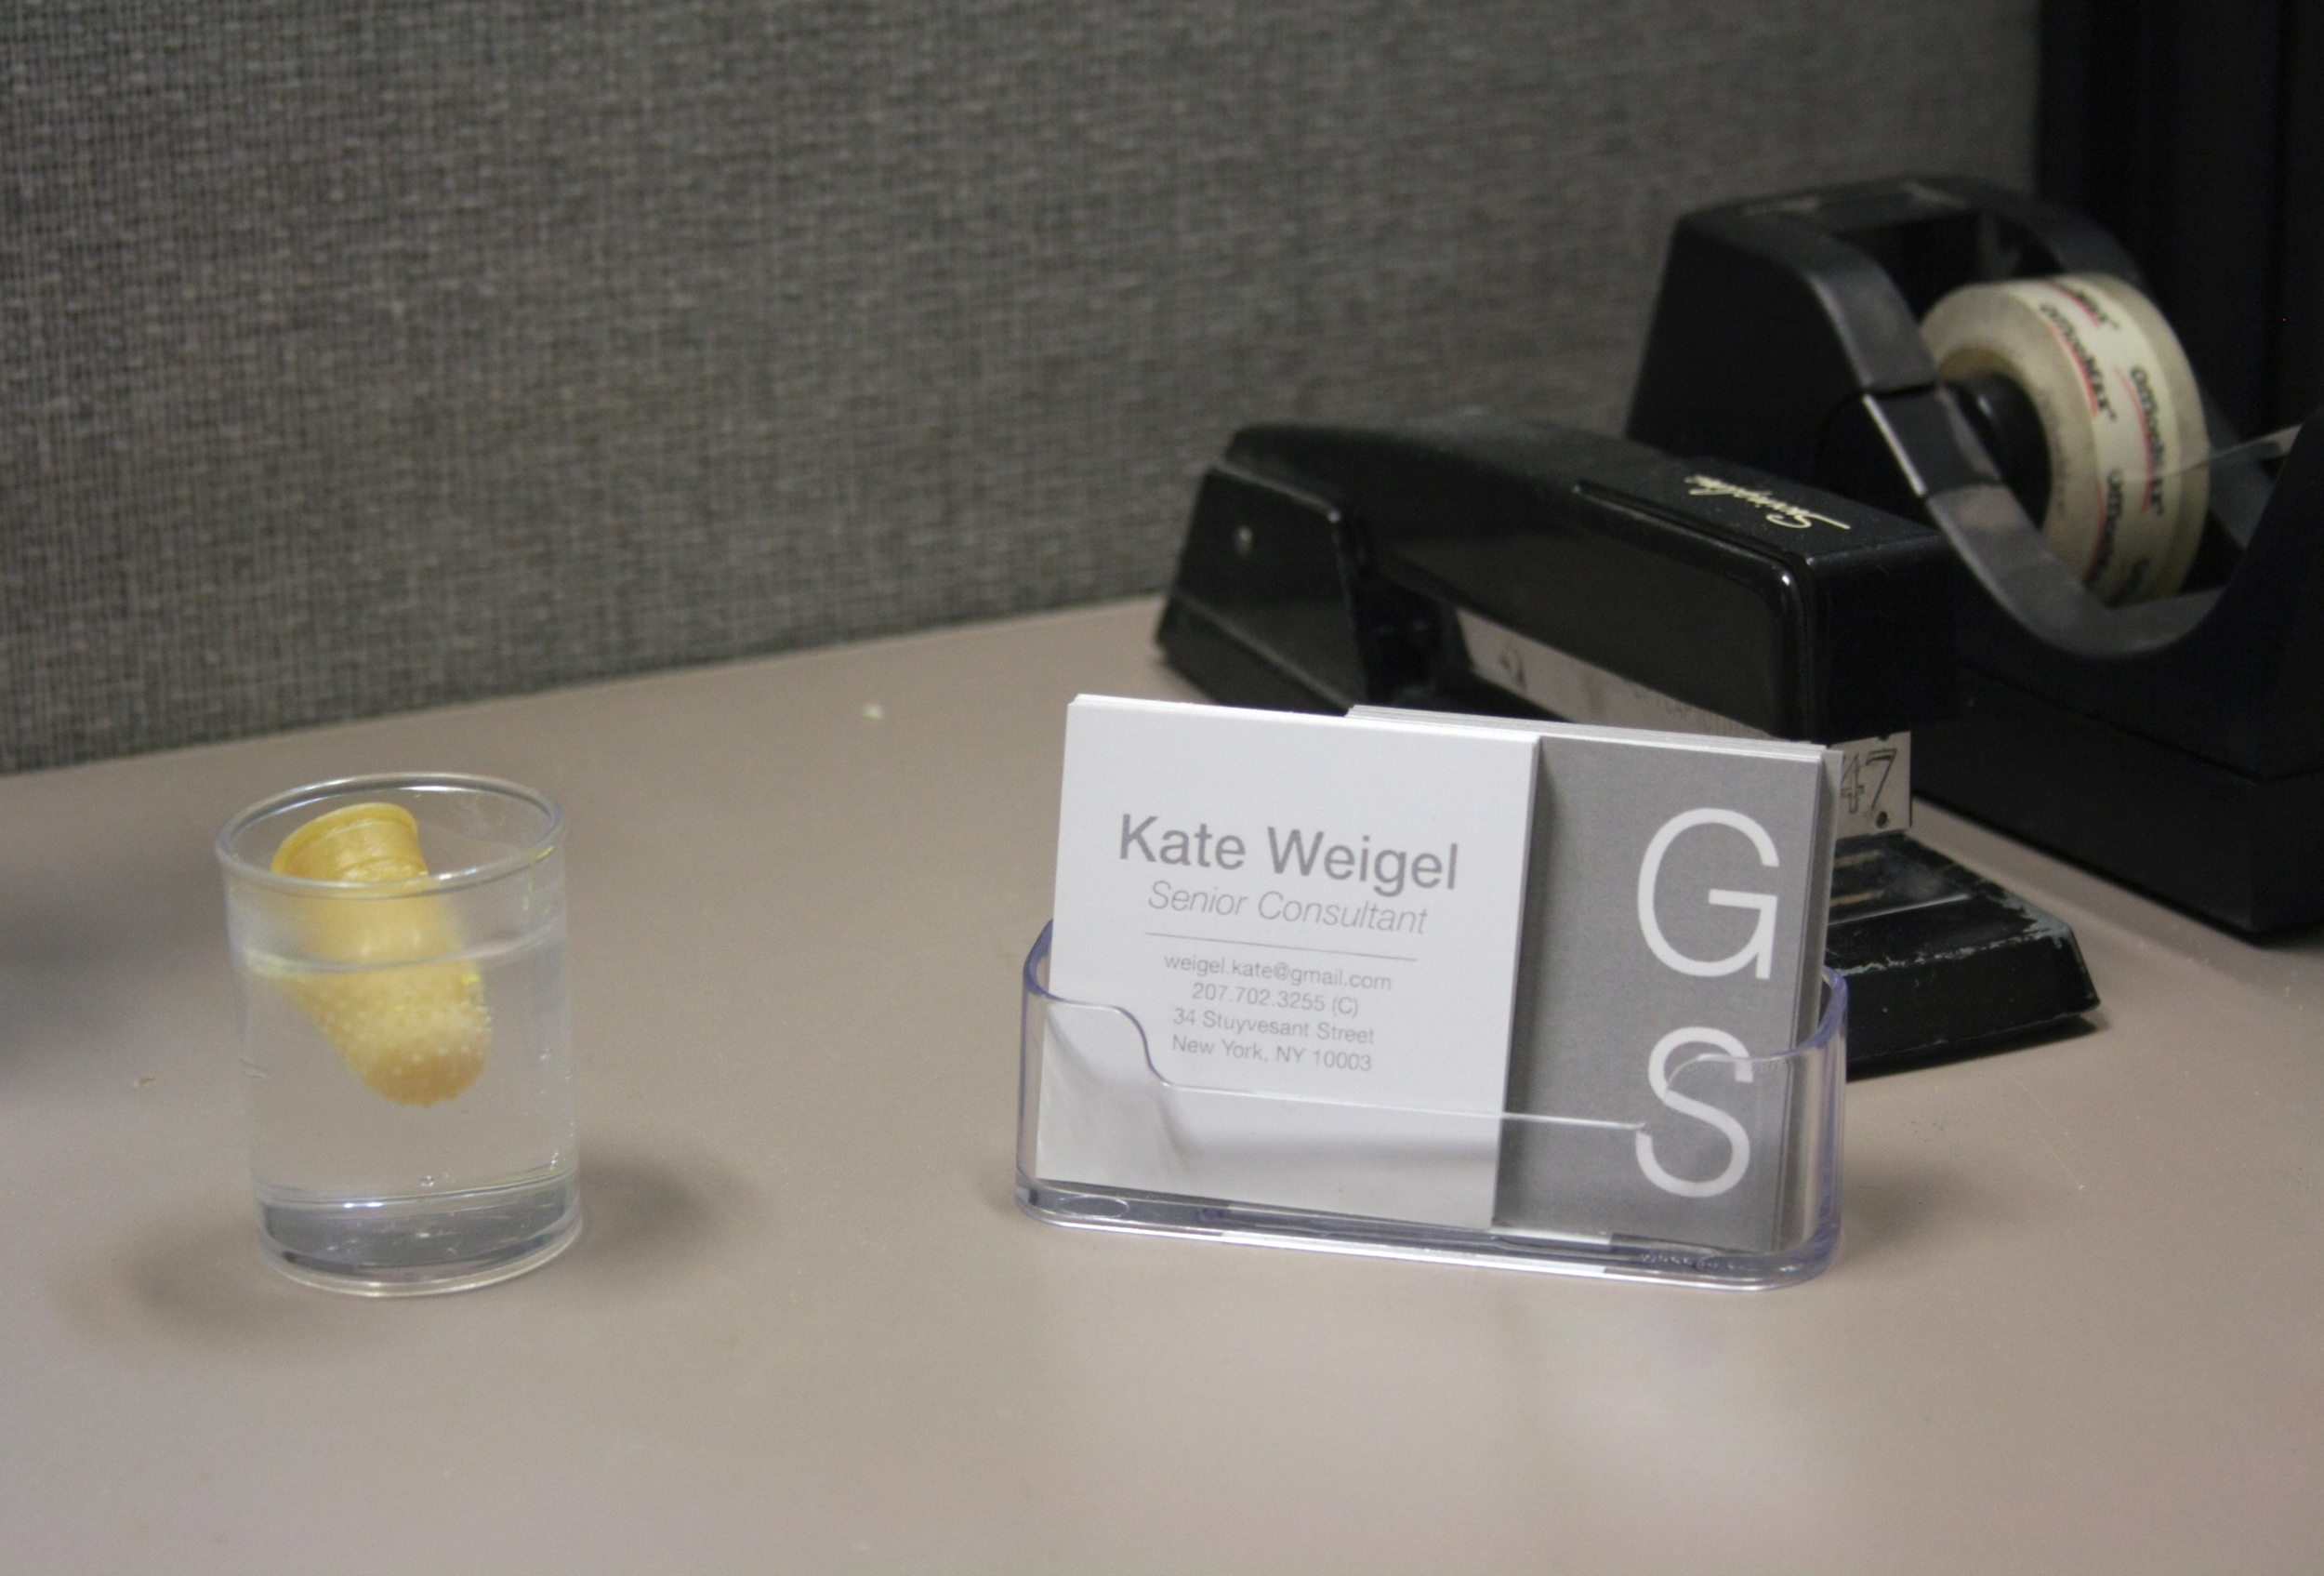 Kate Weigel Office Space